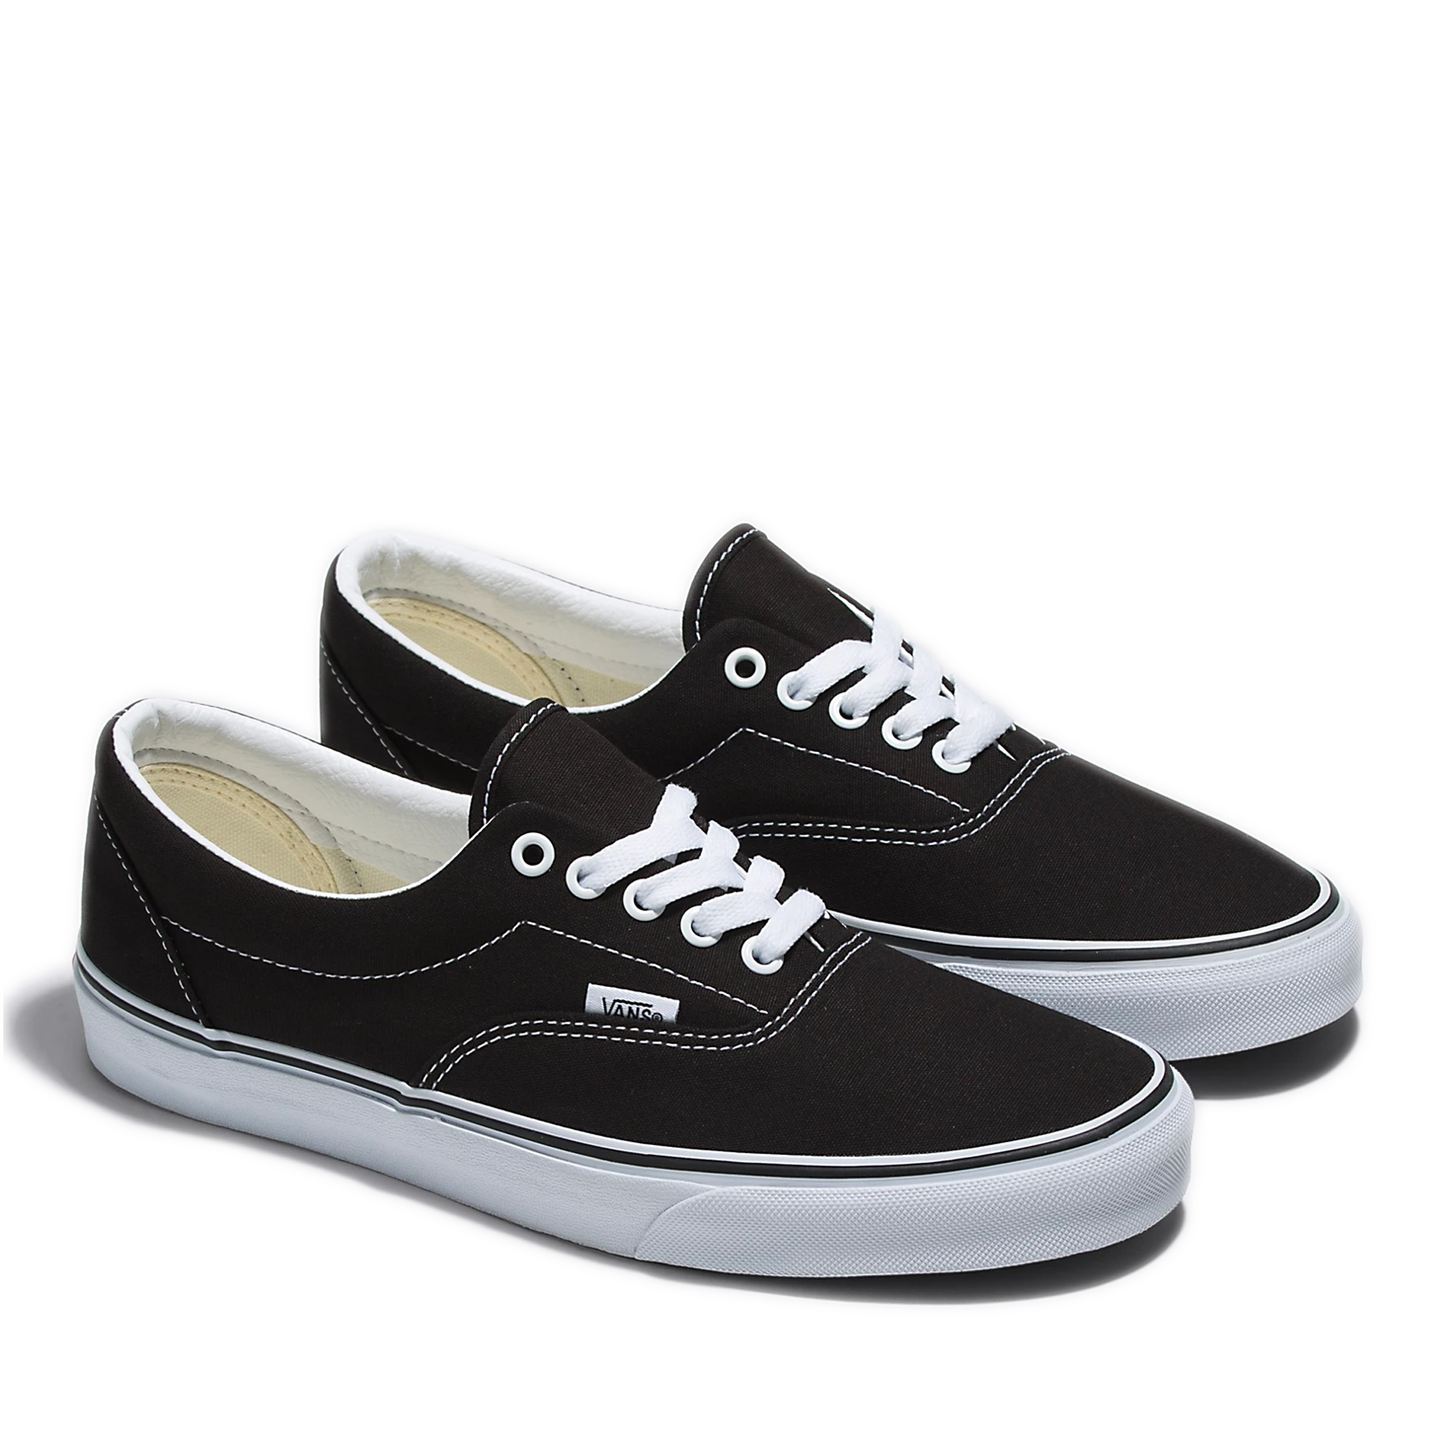 Men's Vans Era Shoes - Black